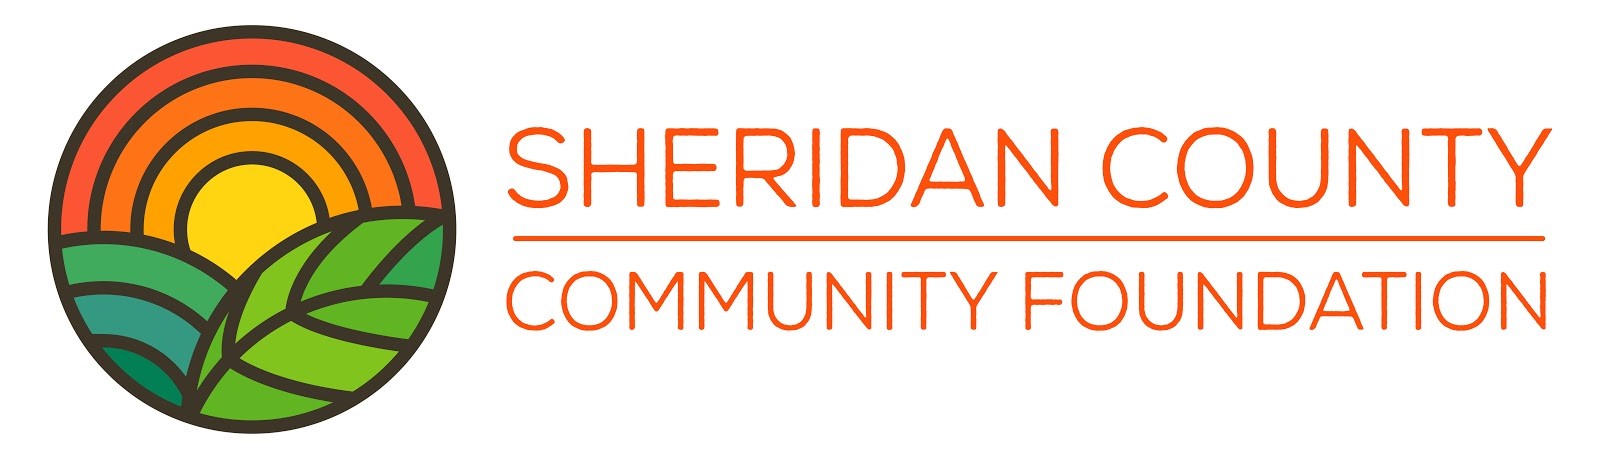 Sheridan County Community Foundation & Economic Development Corporation's Image